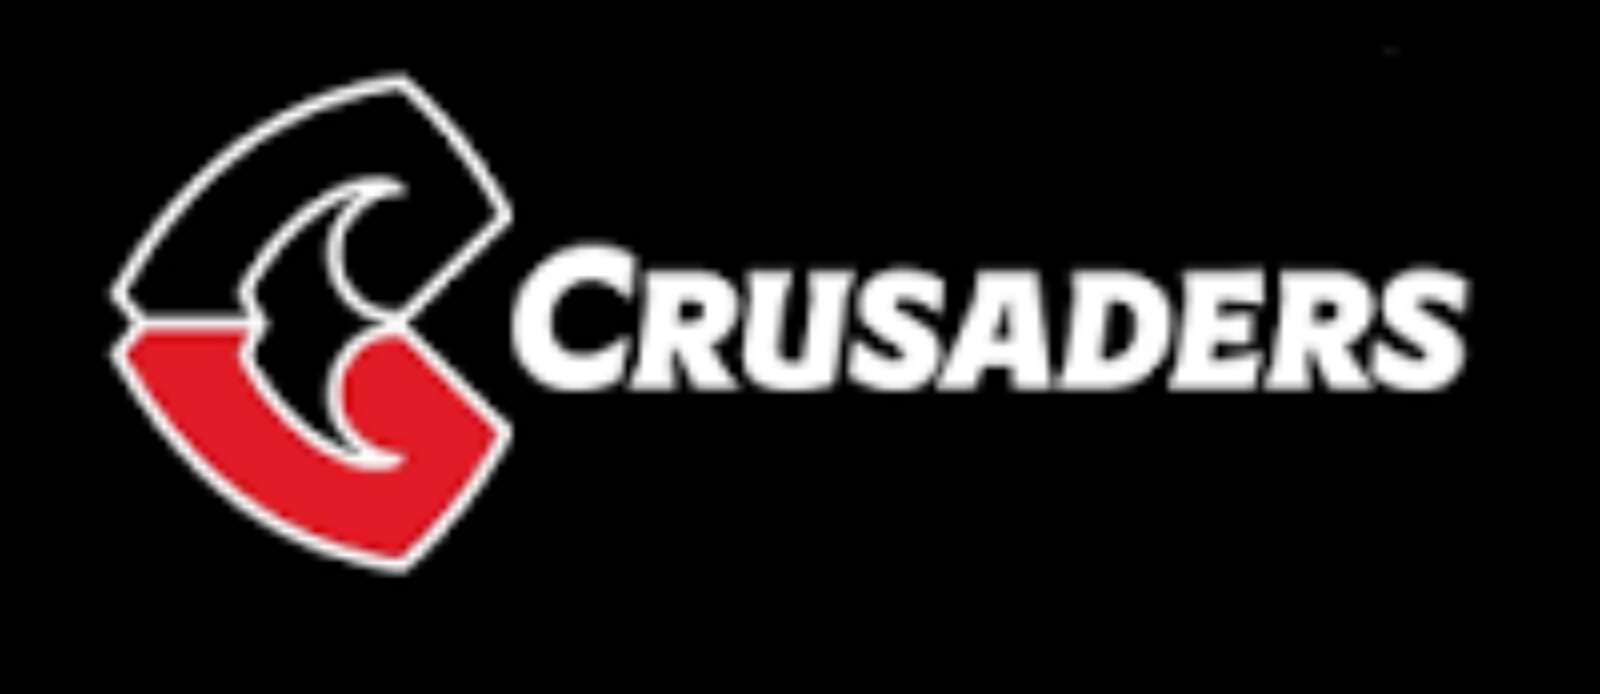 Crusaders Commercial Partnership Manager Header Image.